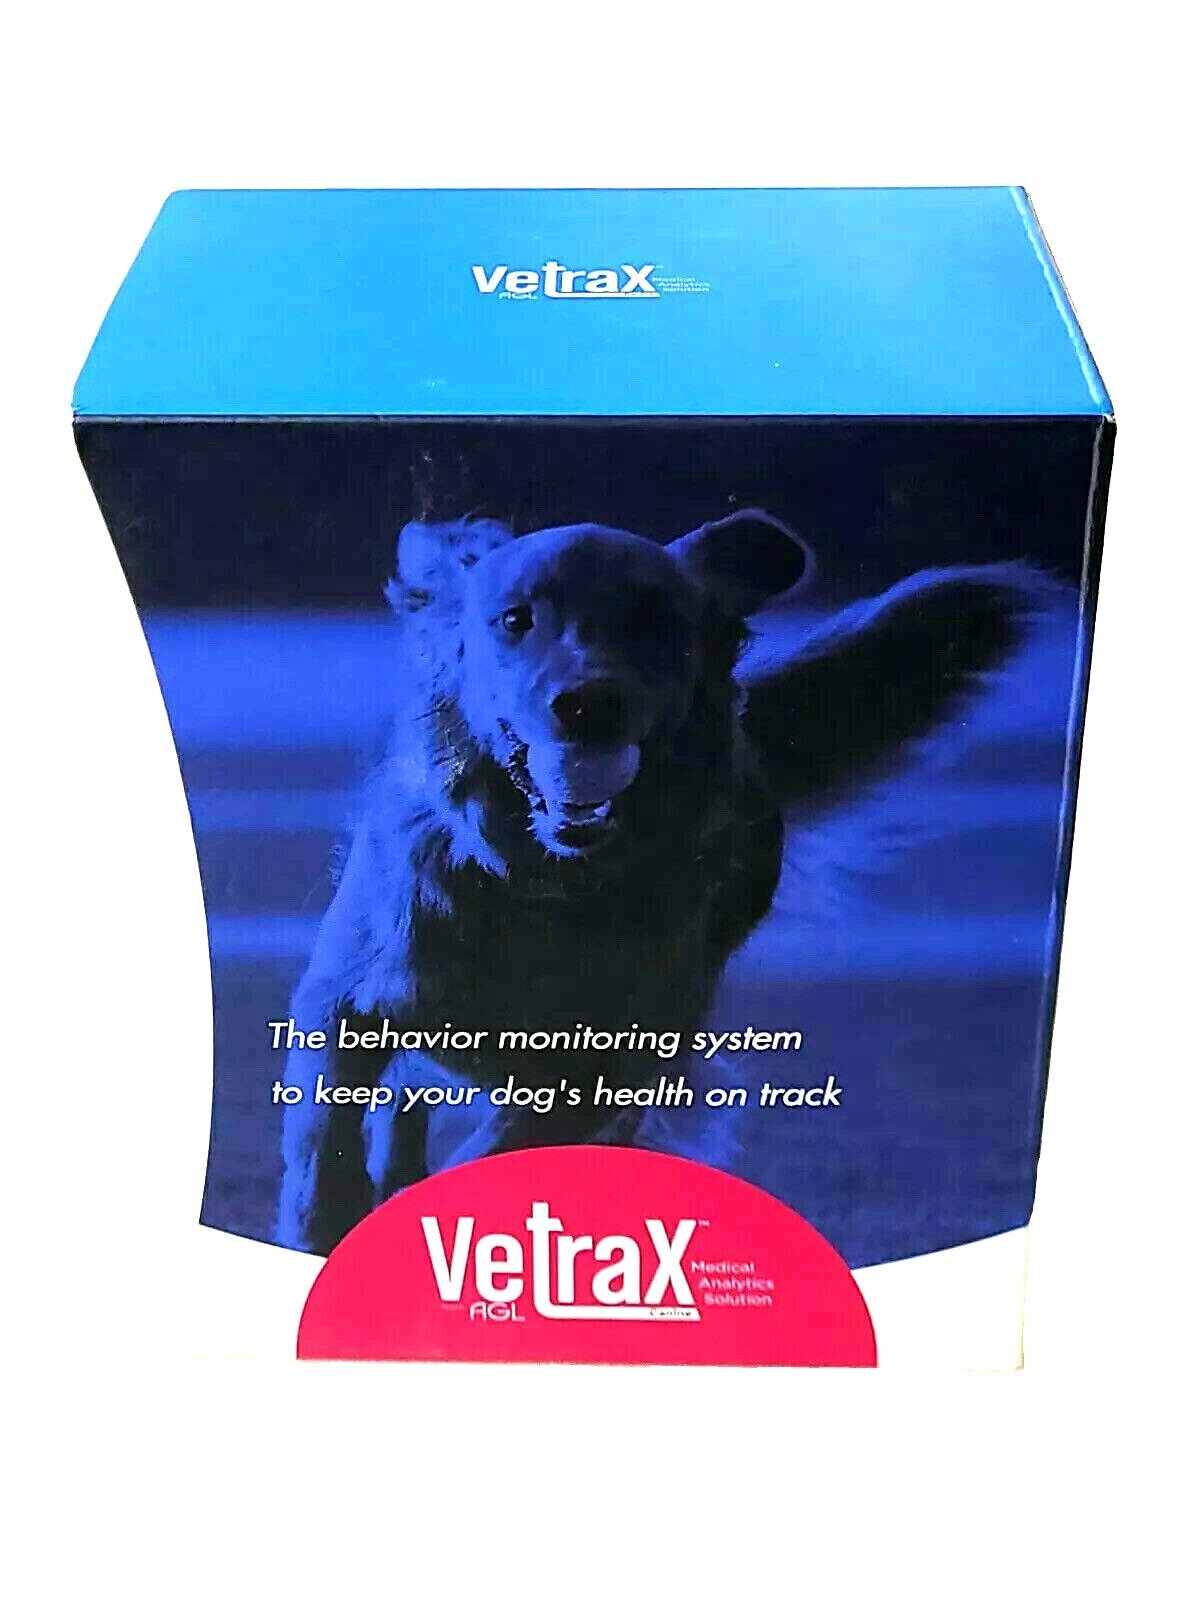 Vetrax Fit Pet Health Fitness Activity Tracker Medical Monitoring new in  box | eBay